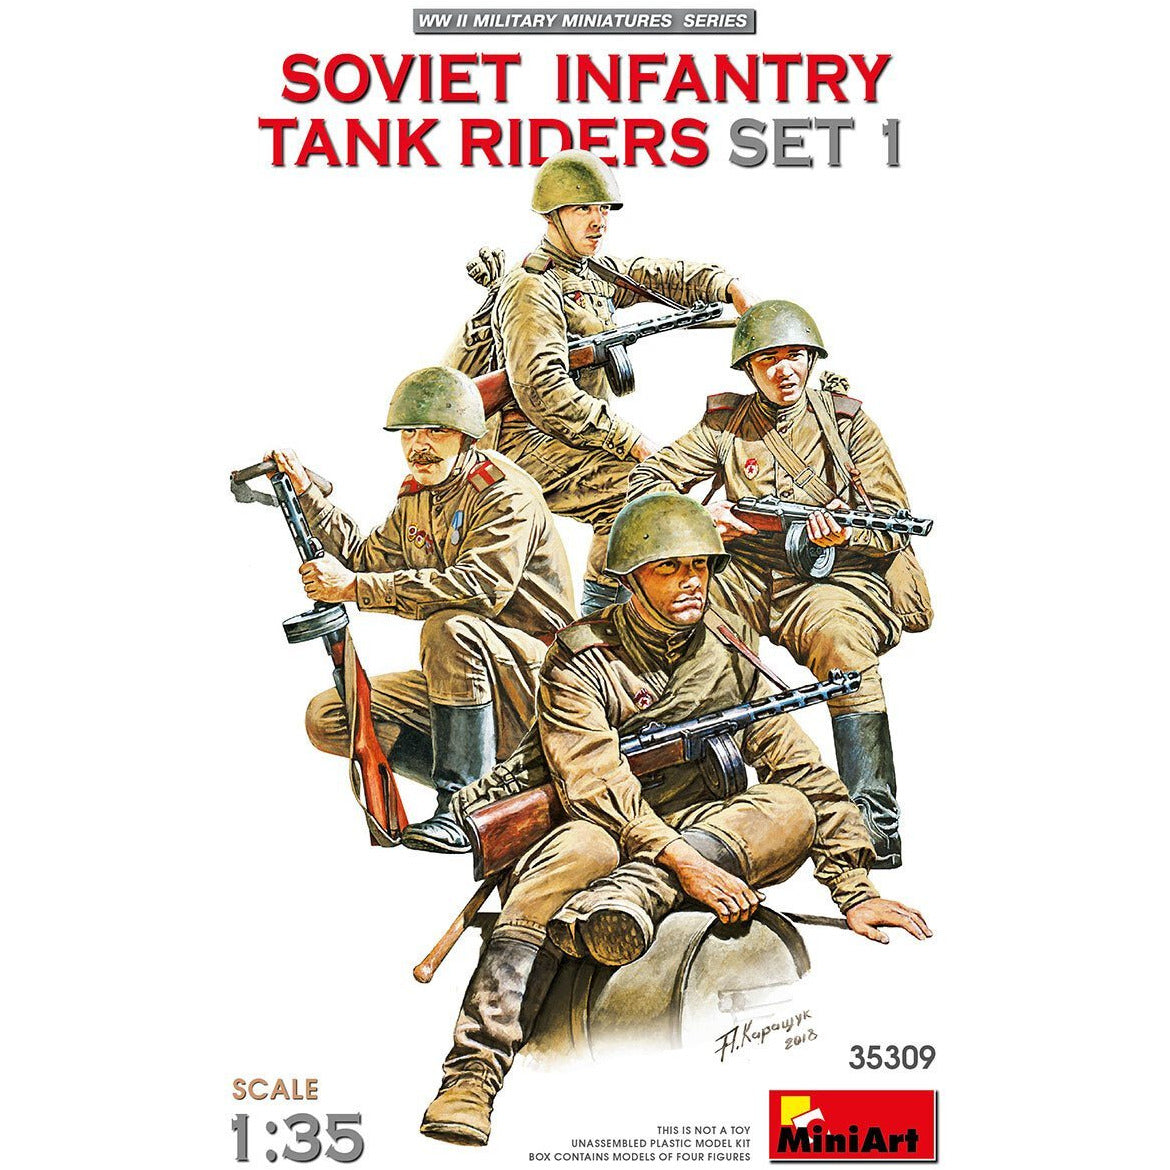 MINIART 1/35 Soviet Infantry Tank Riders Set 1